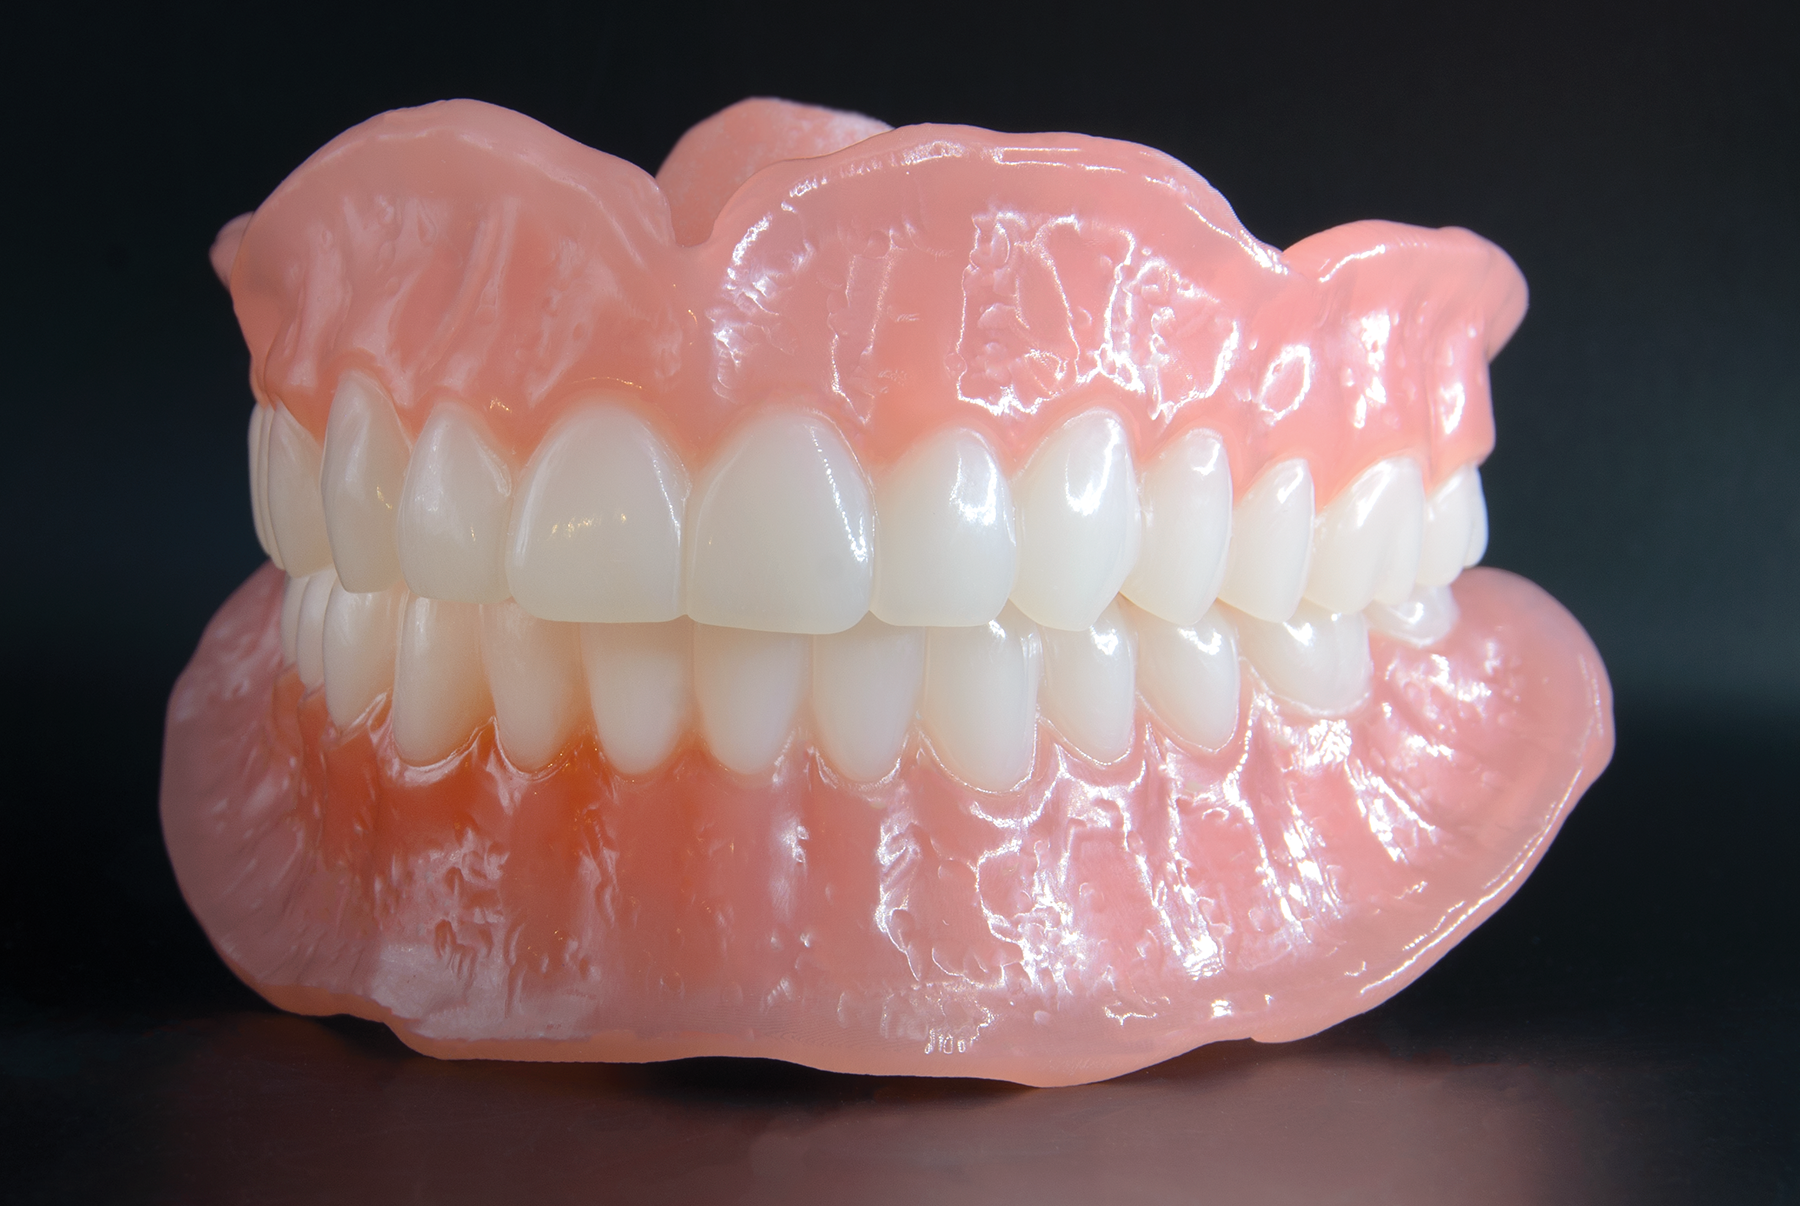 Trusana Premium Denture System from Myerson | Image Credit: © Myerson